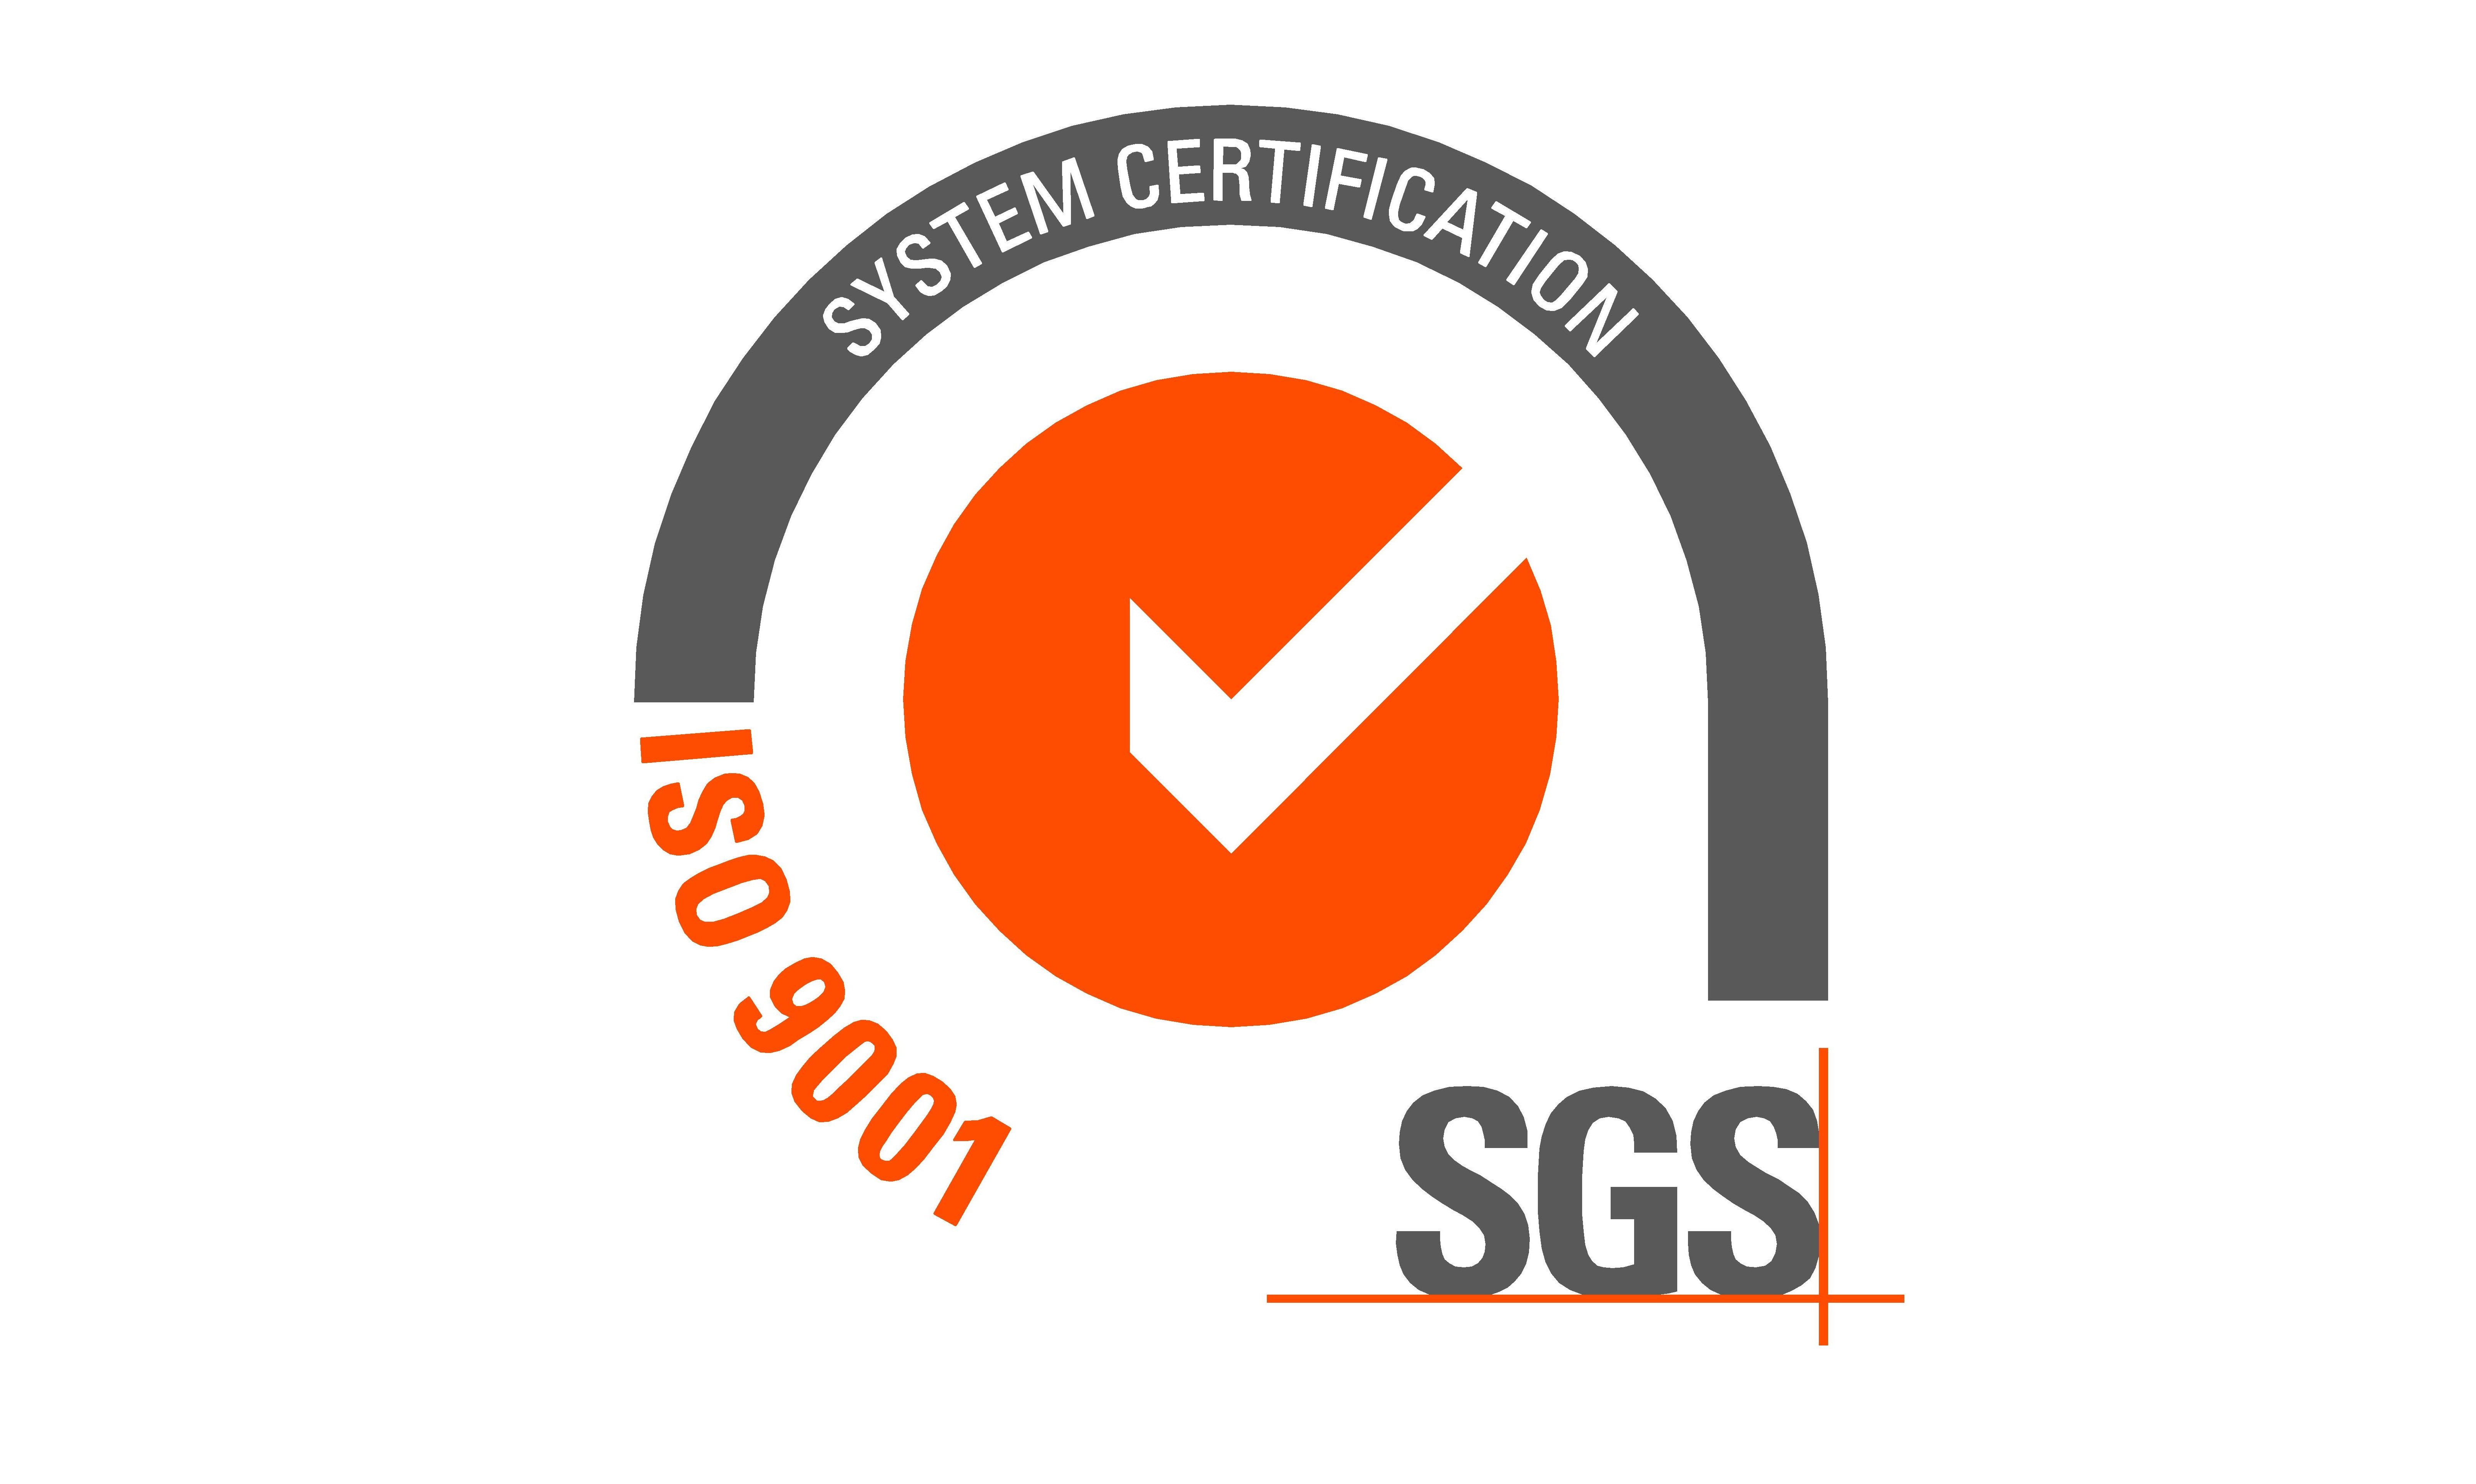 Sgs limited. Логотип СЖС Восток Лимитед. System Certification ISO 9001:2000 SGS. SGS Vostok Limited лого. ISO 9001 СЖС.